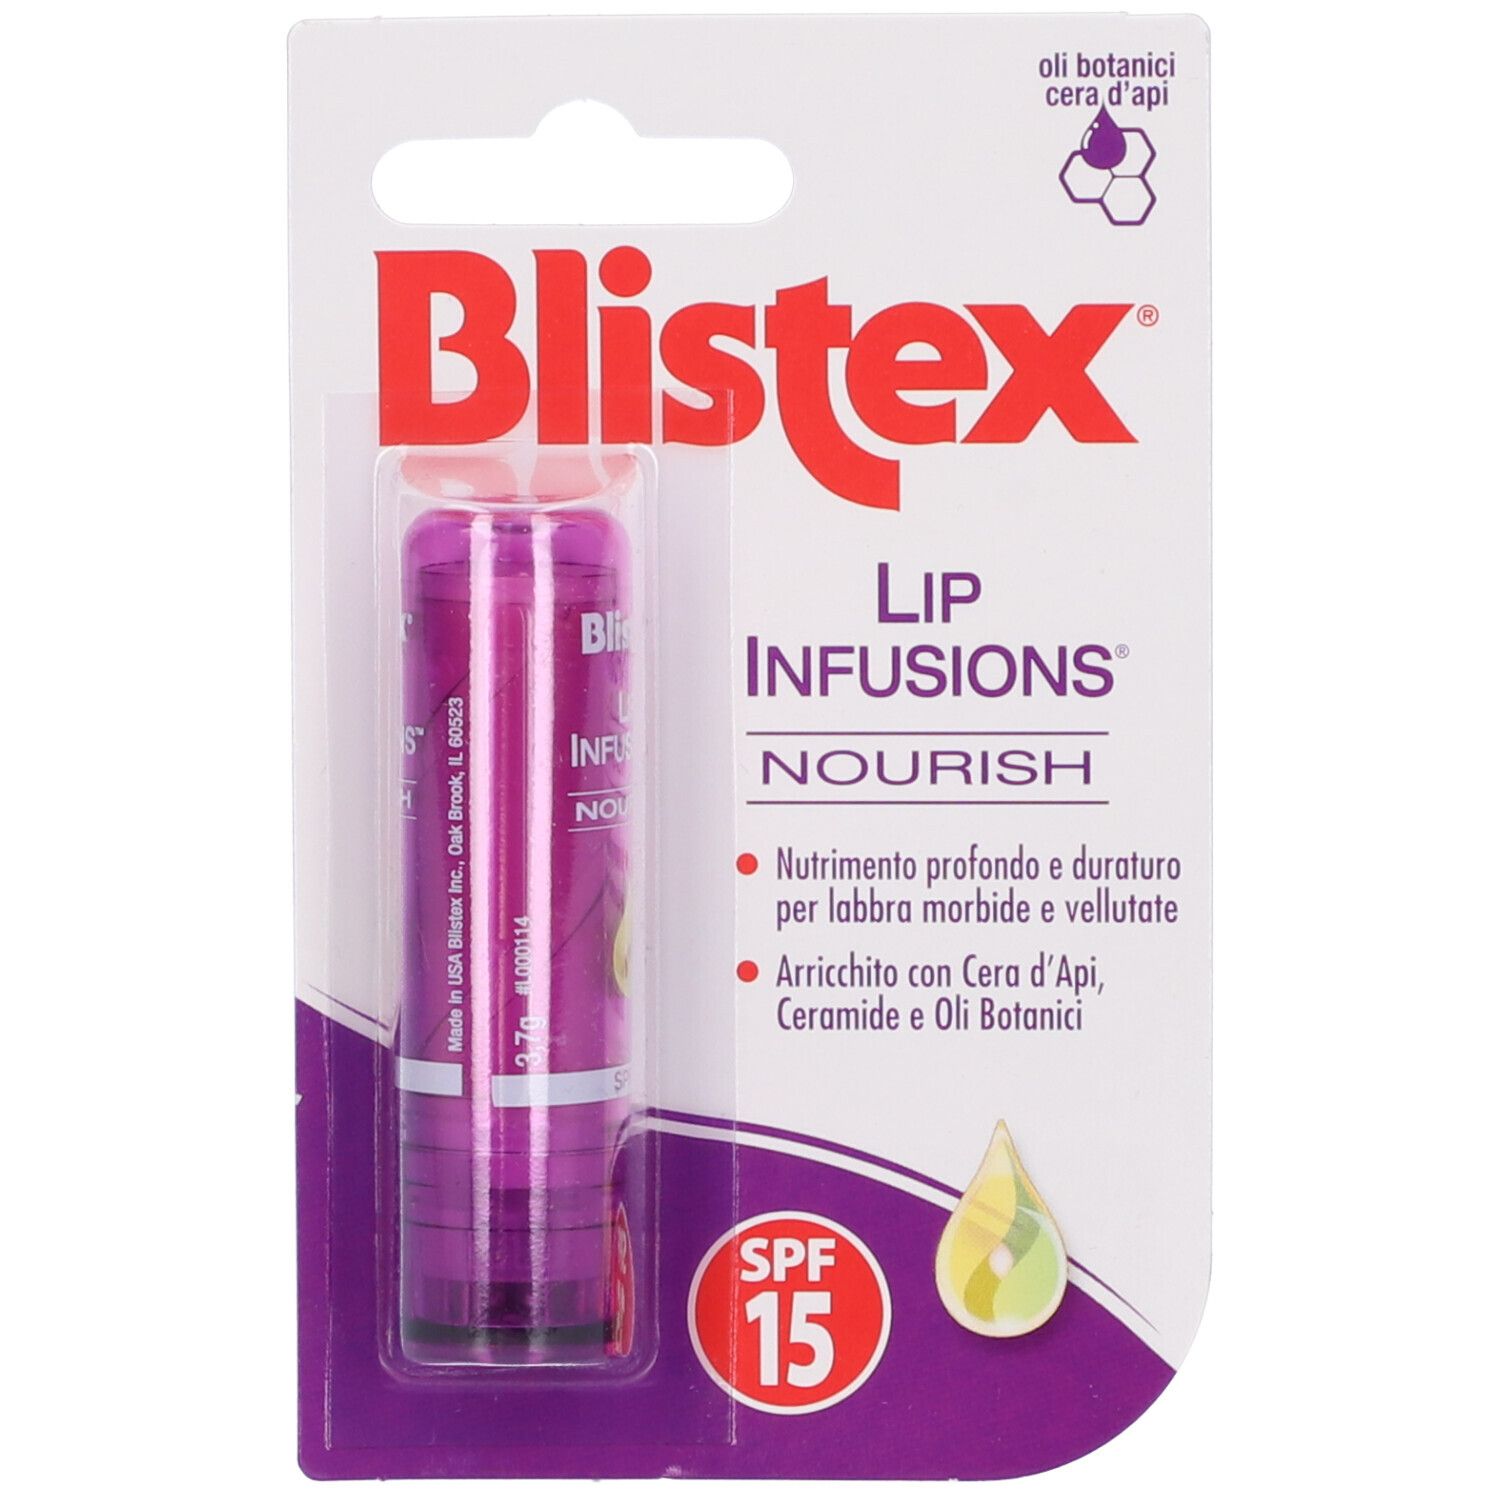 Blistex Lip Infusions Nourish